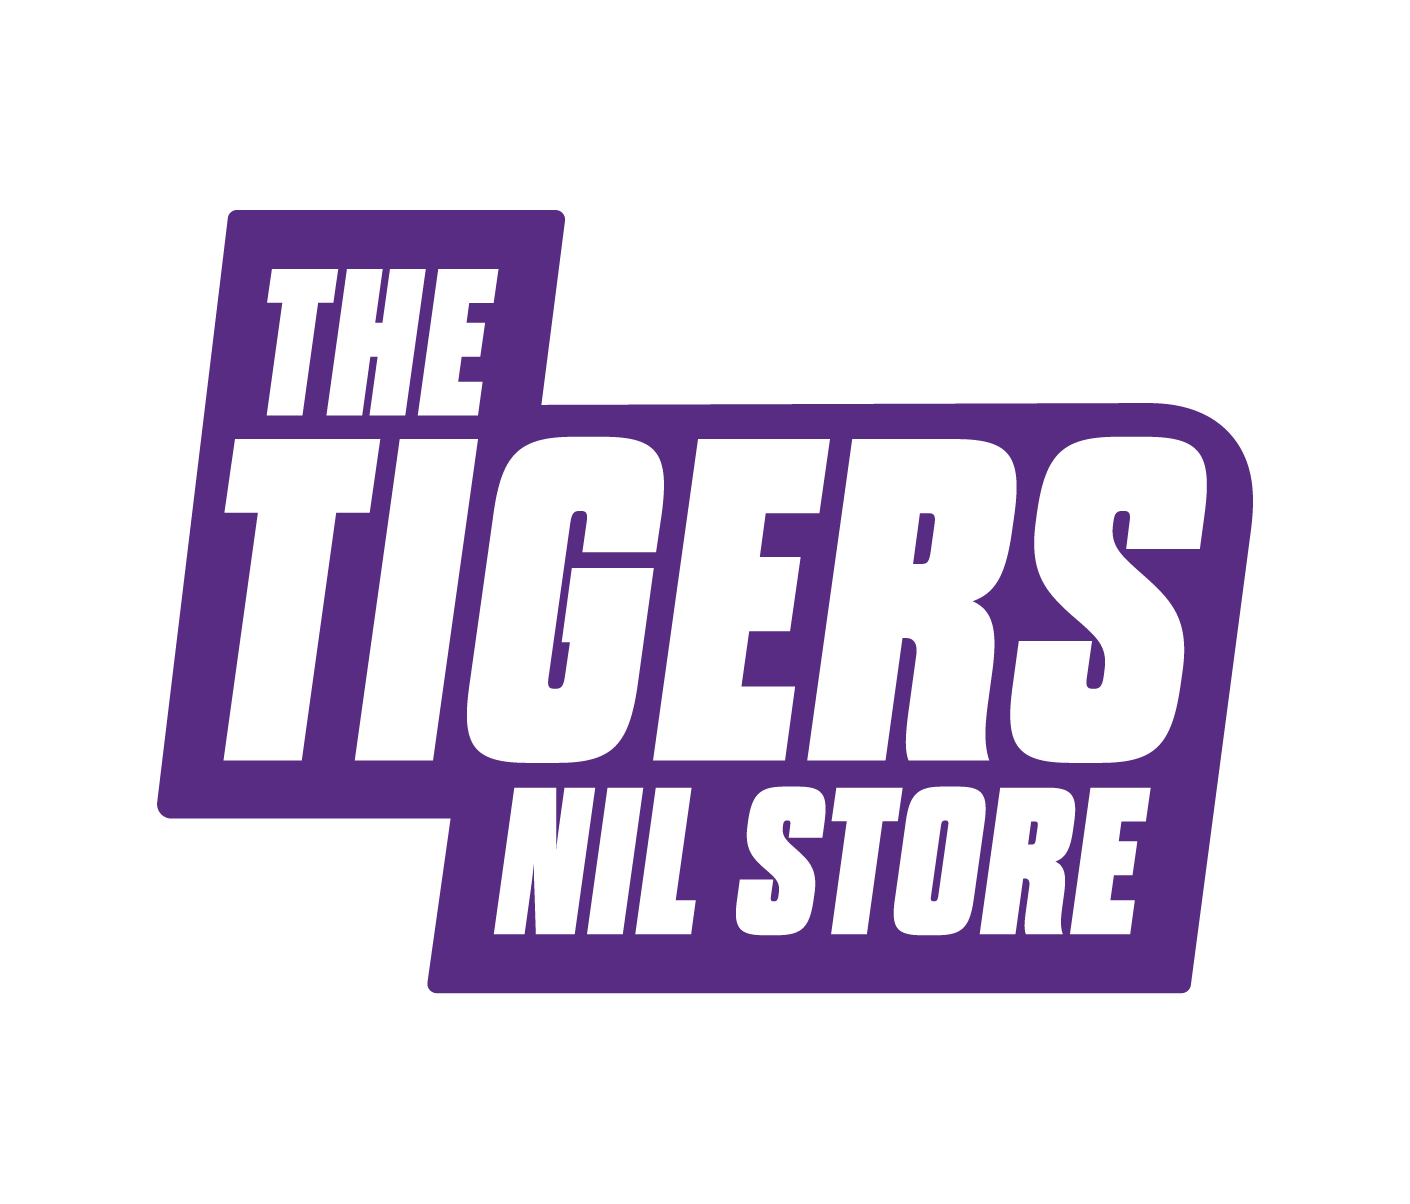 HOT] New Custom Custom LSU Tigers Jersey Purple Basketball